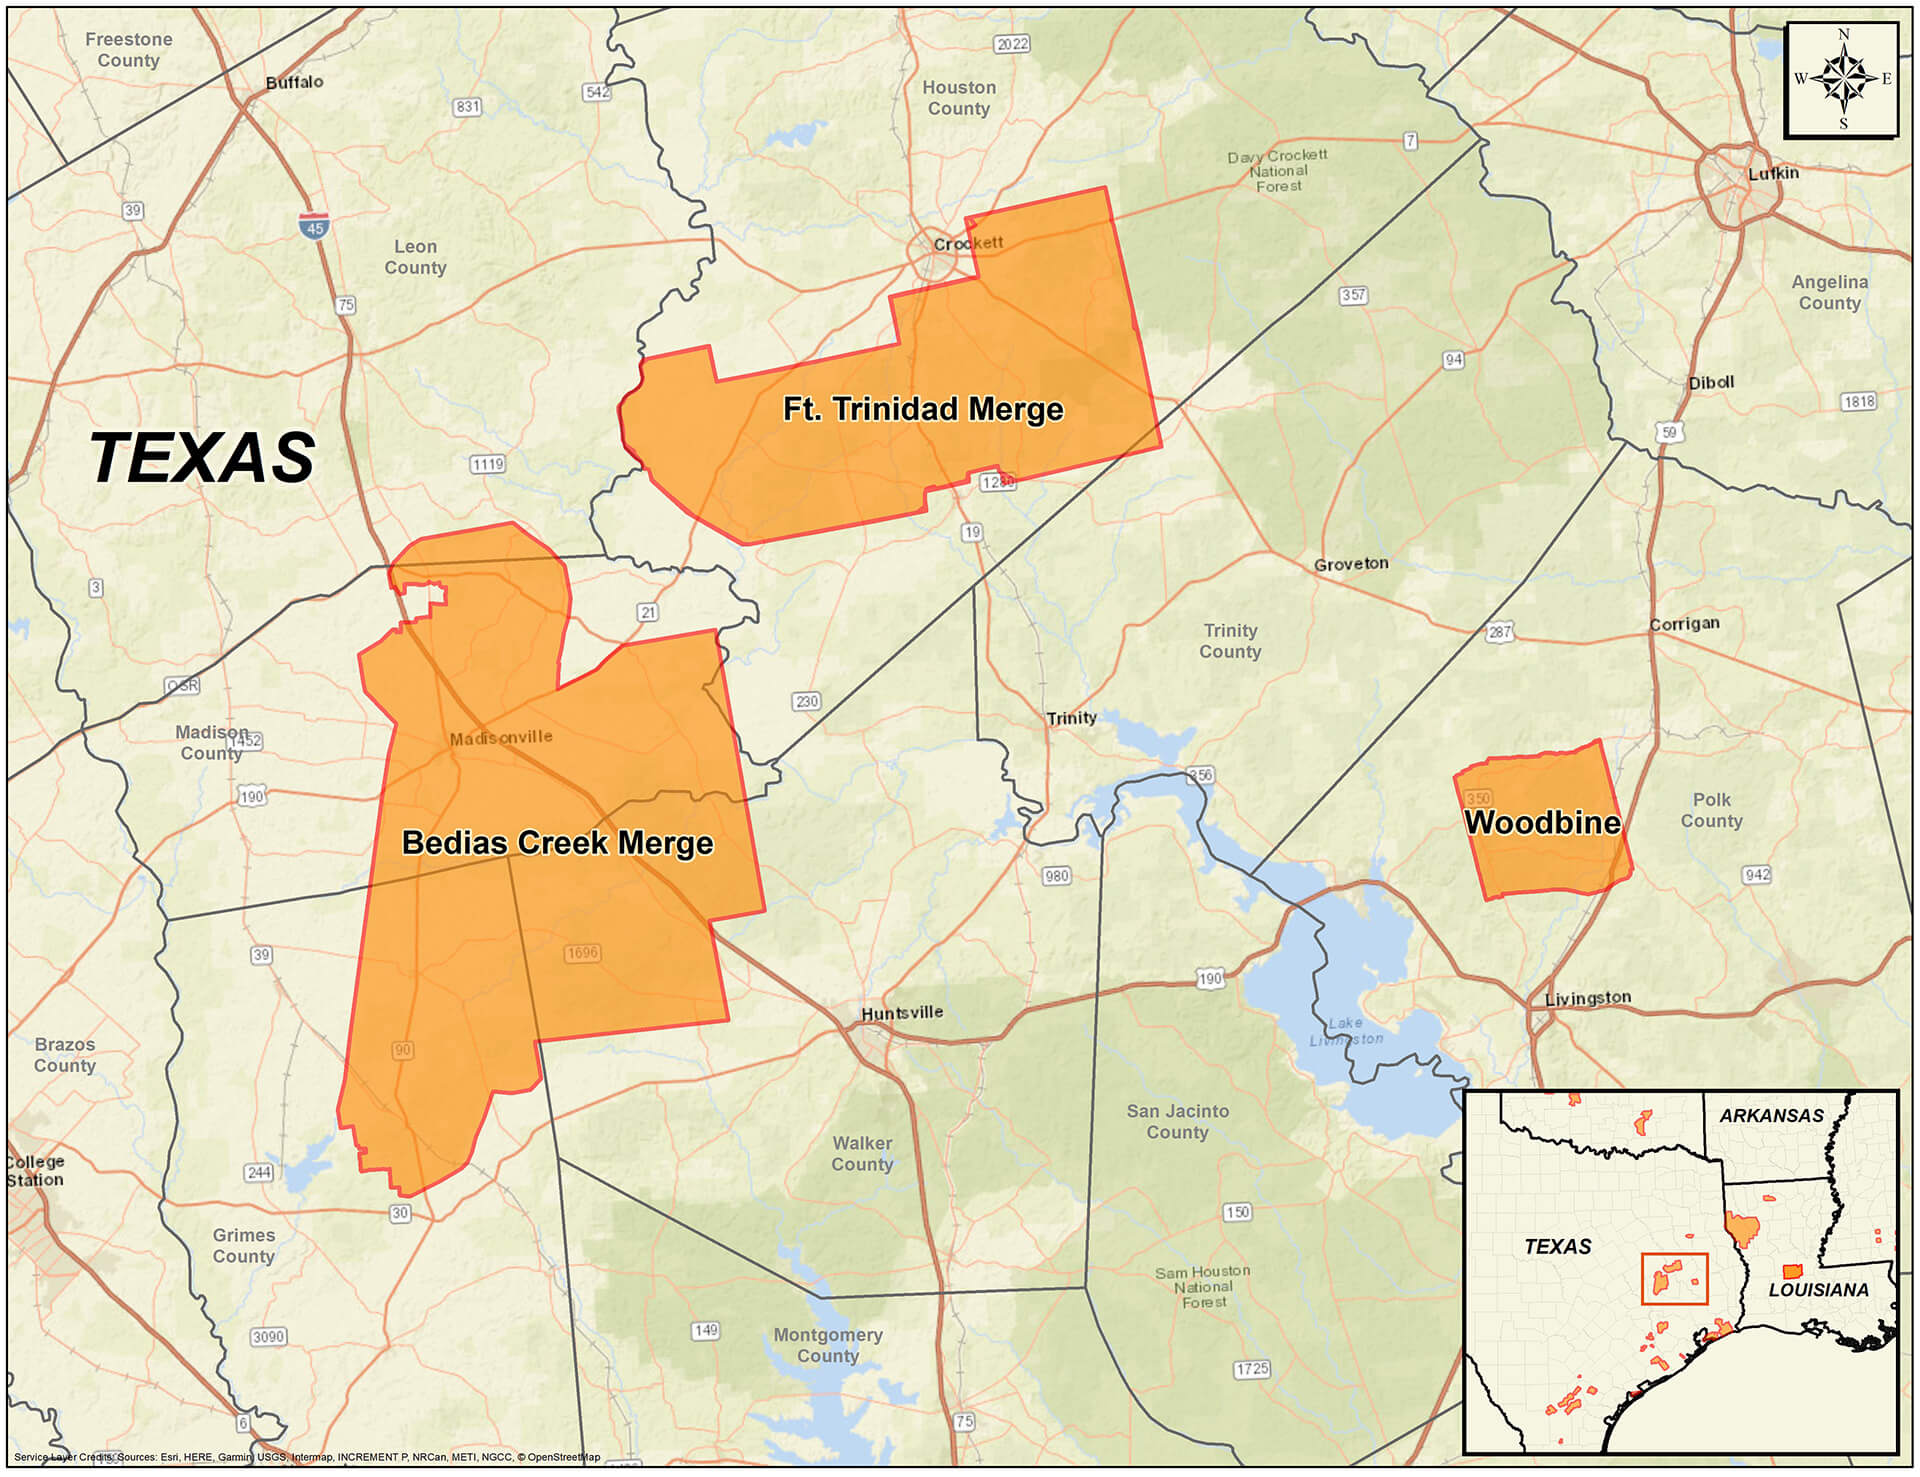 Multi-client seismic surveys – East Texas